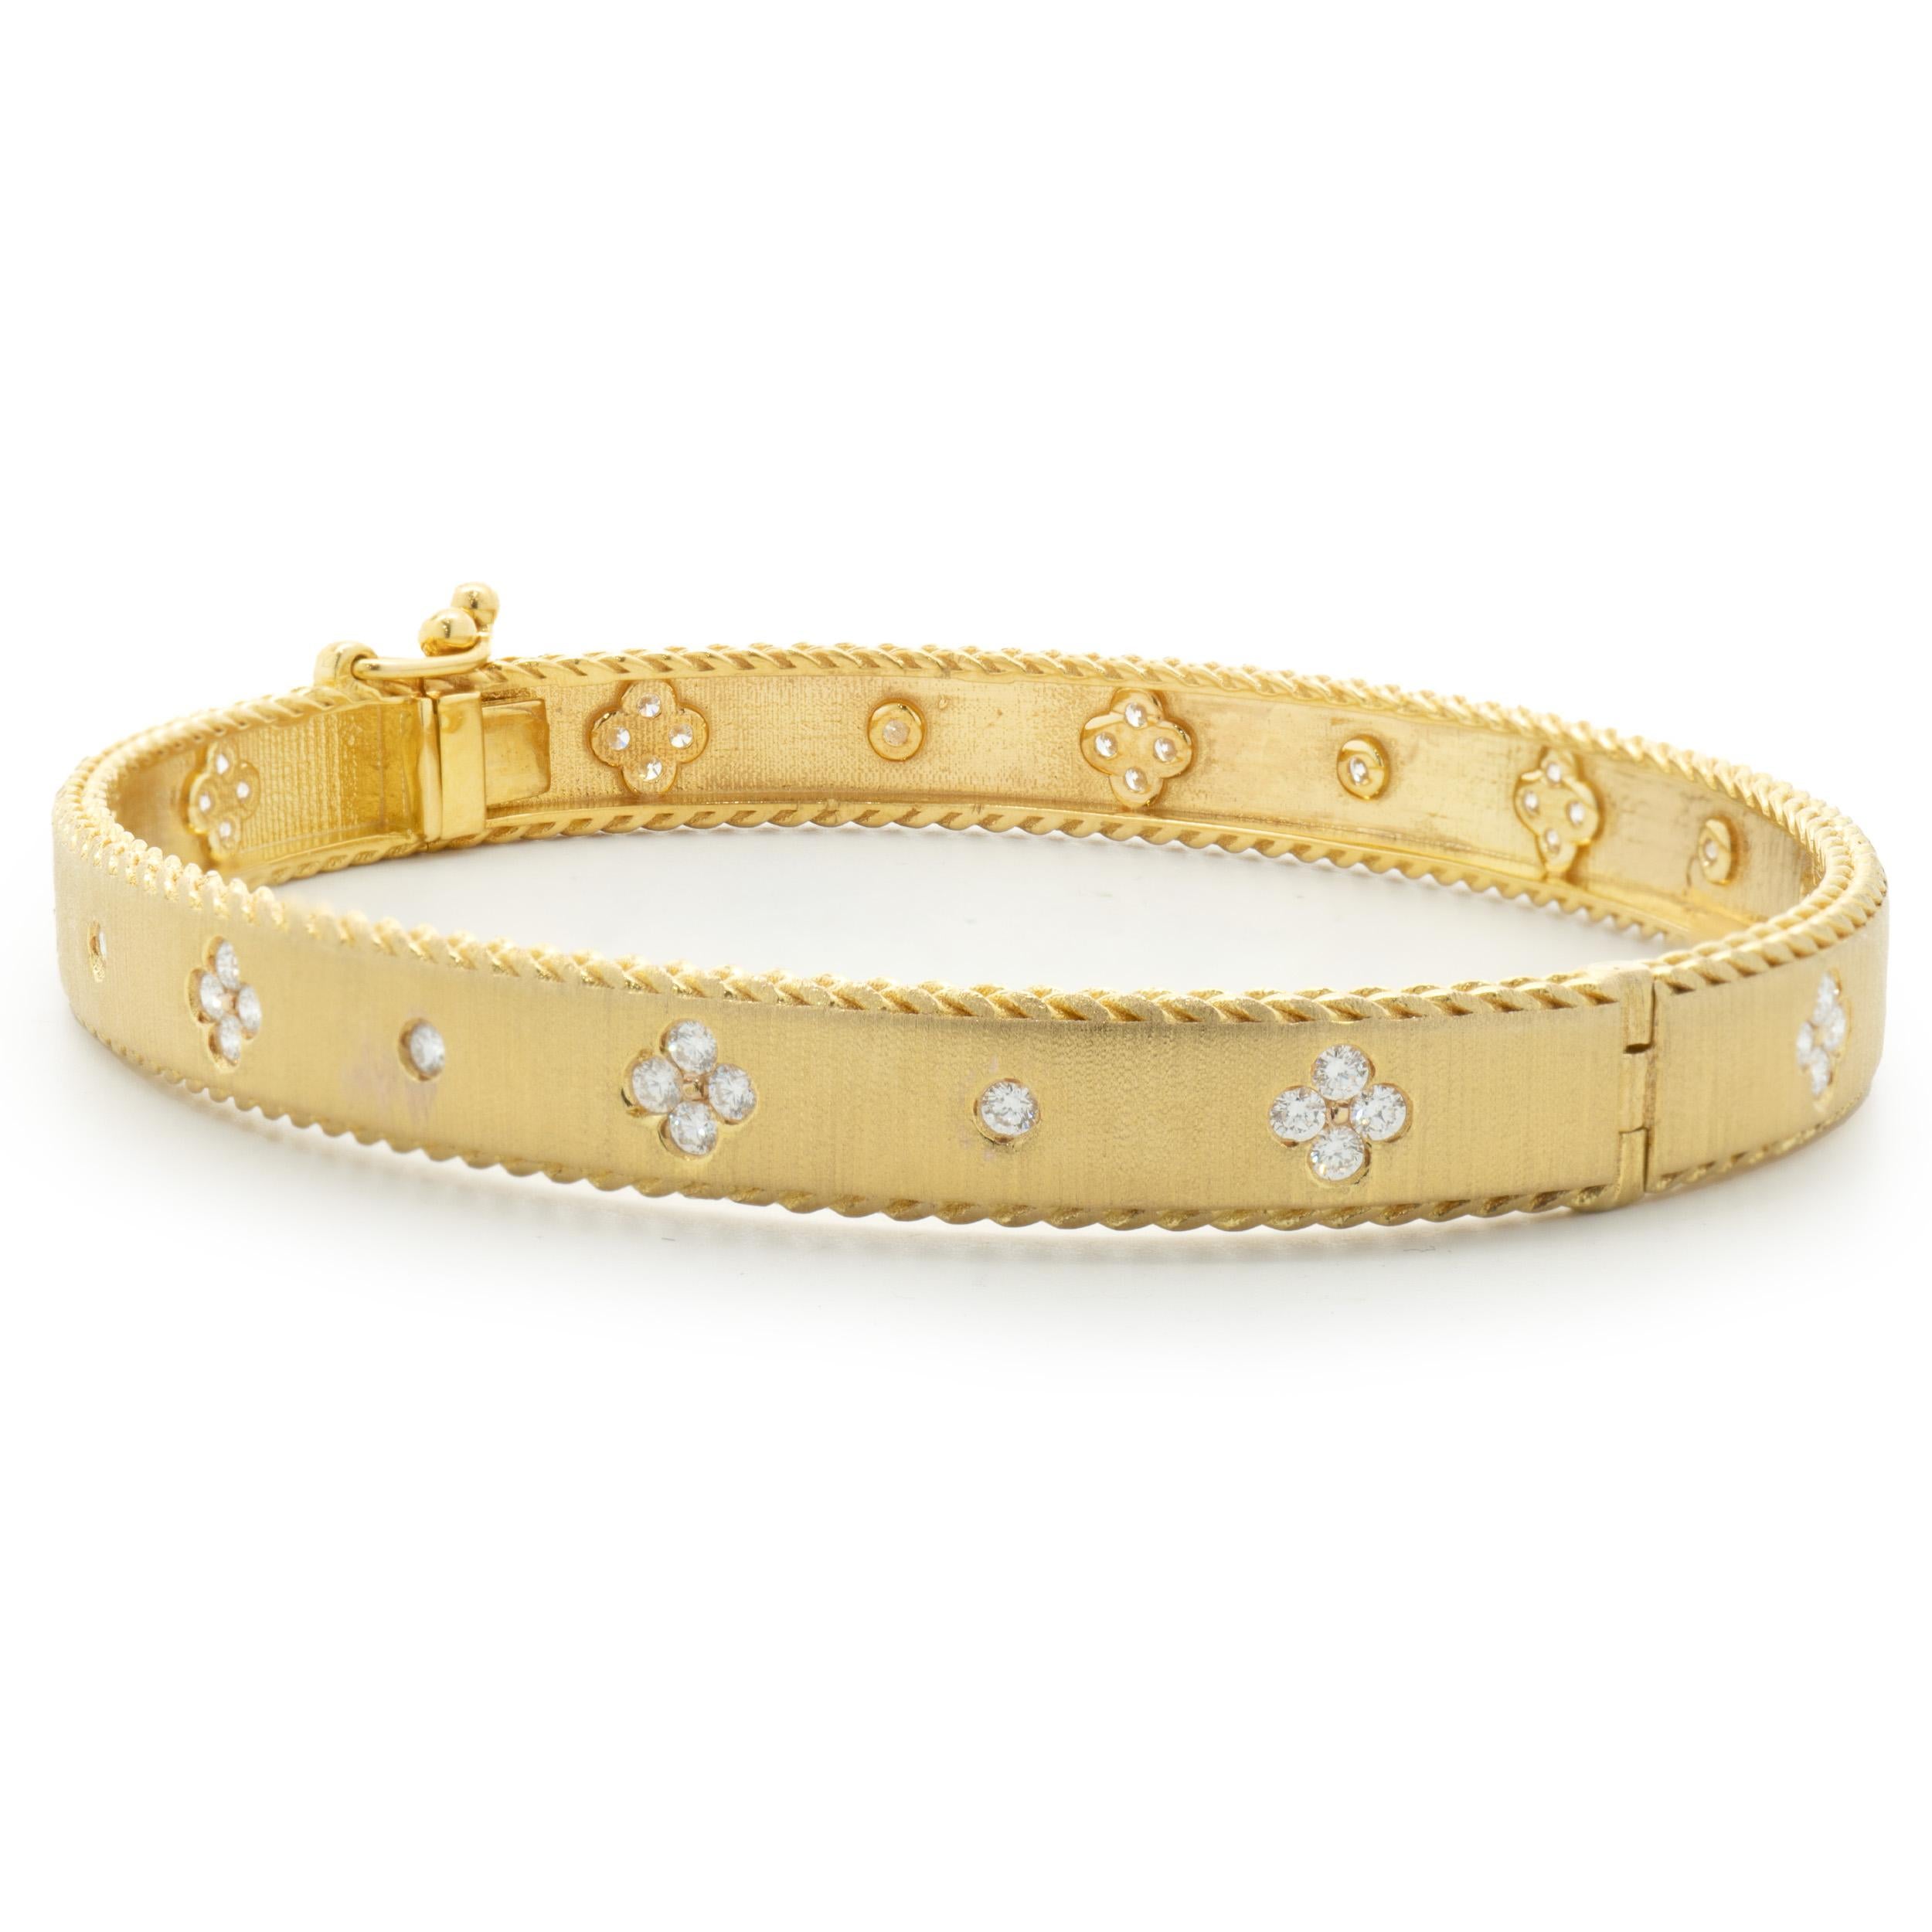 Designer: custom design
Material: 18K yellow gold
Diamonds: 48 round brilliant cut = 1.00cttw
Color: G 
Clarity: VS1-2
Dimensions: bracelet measures 7-inches in diameter 
Weight: 13.33 grams
